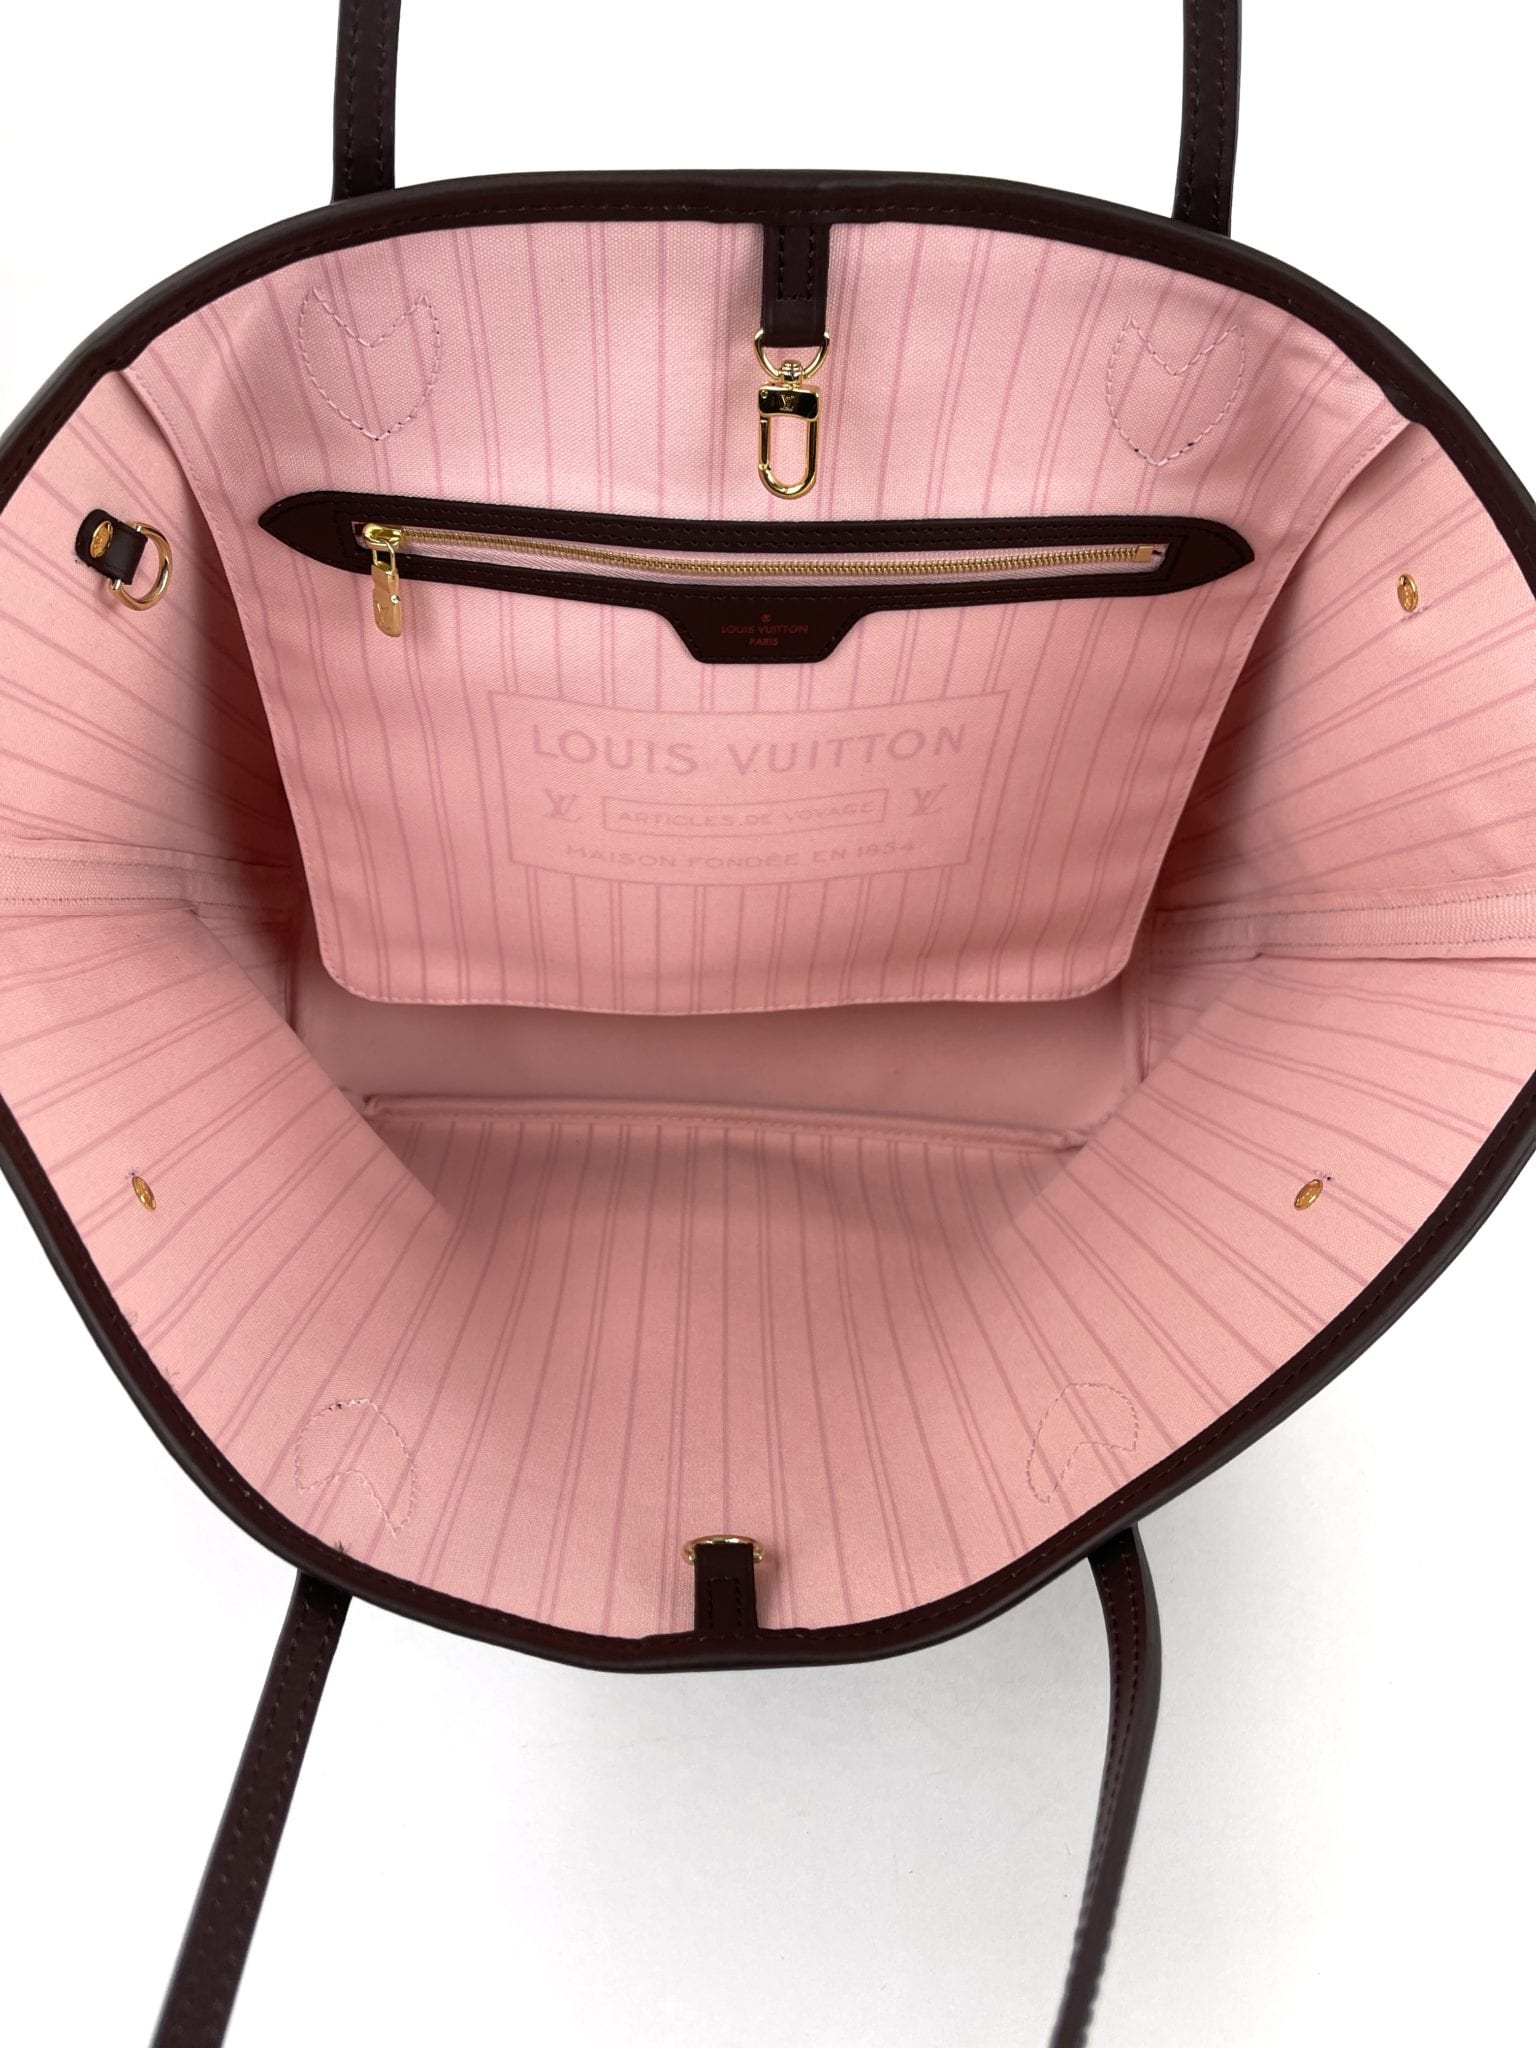 Neverfull mm Damier ebene Ballerine pink interior  Louis vuitton bag  neverfull, Bags designer fashion, Louis vuitton